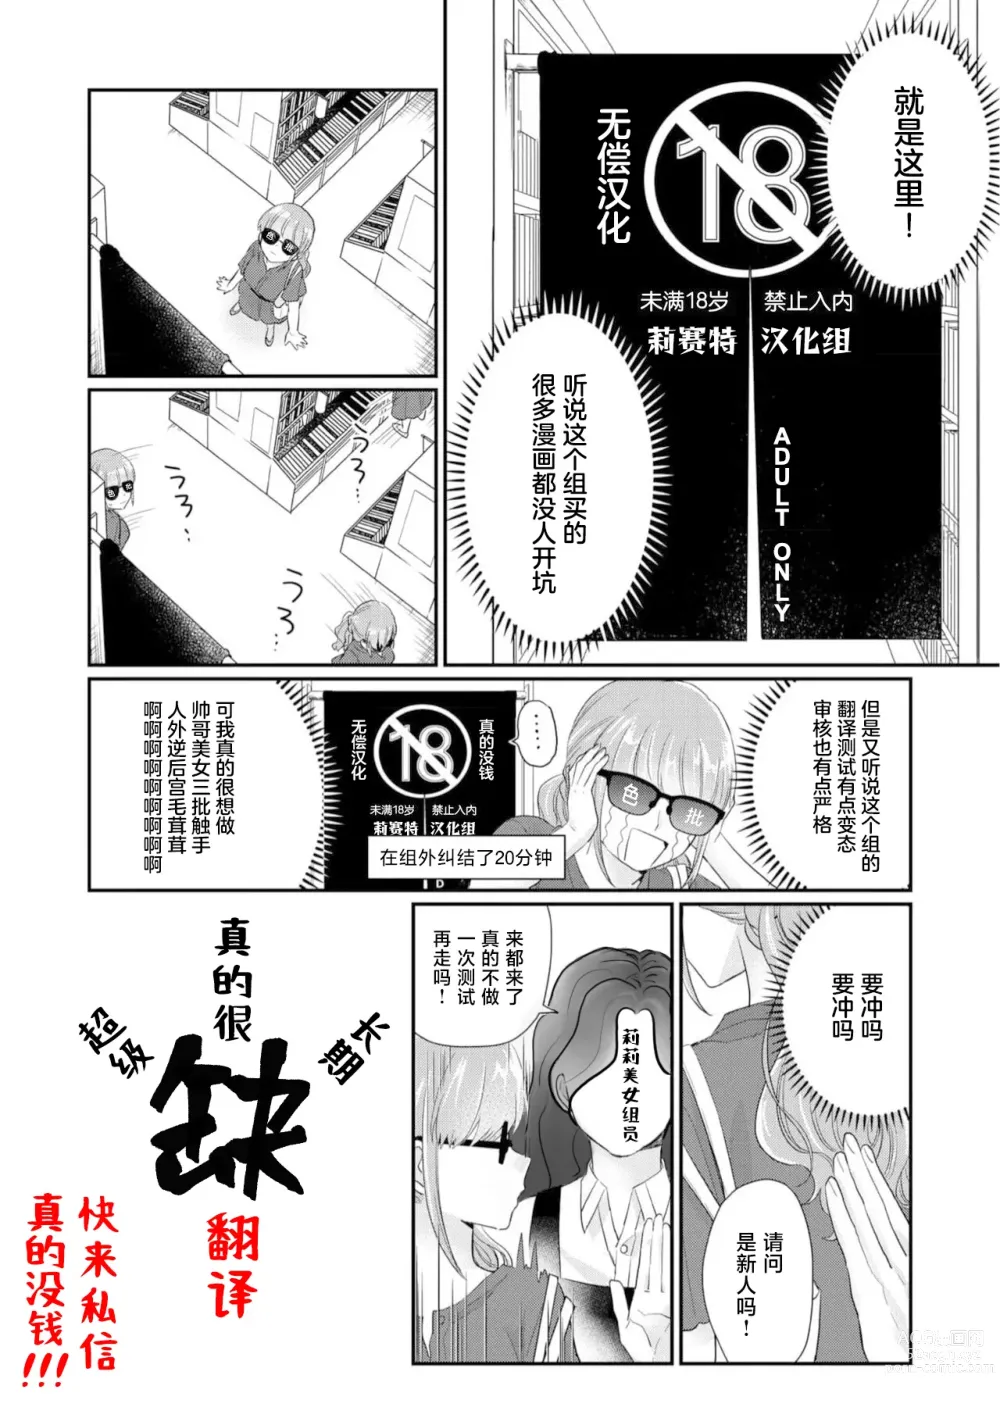 Page 118 of manga 身为恶役千金，堕落于魔界王子身下这条路线真的可以有？ 1-4